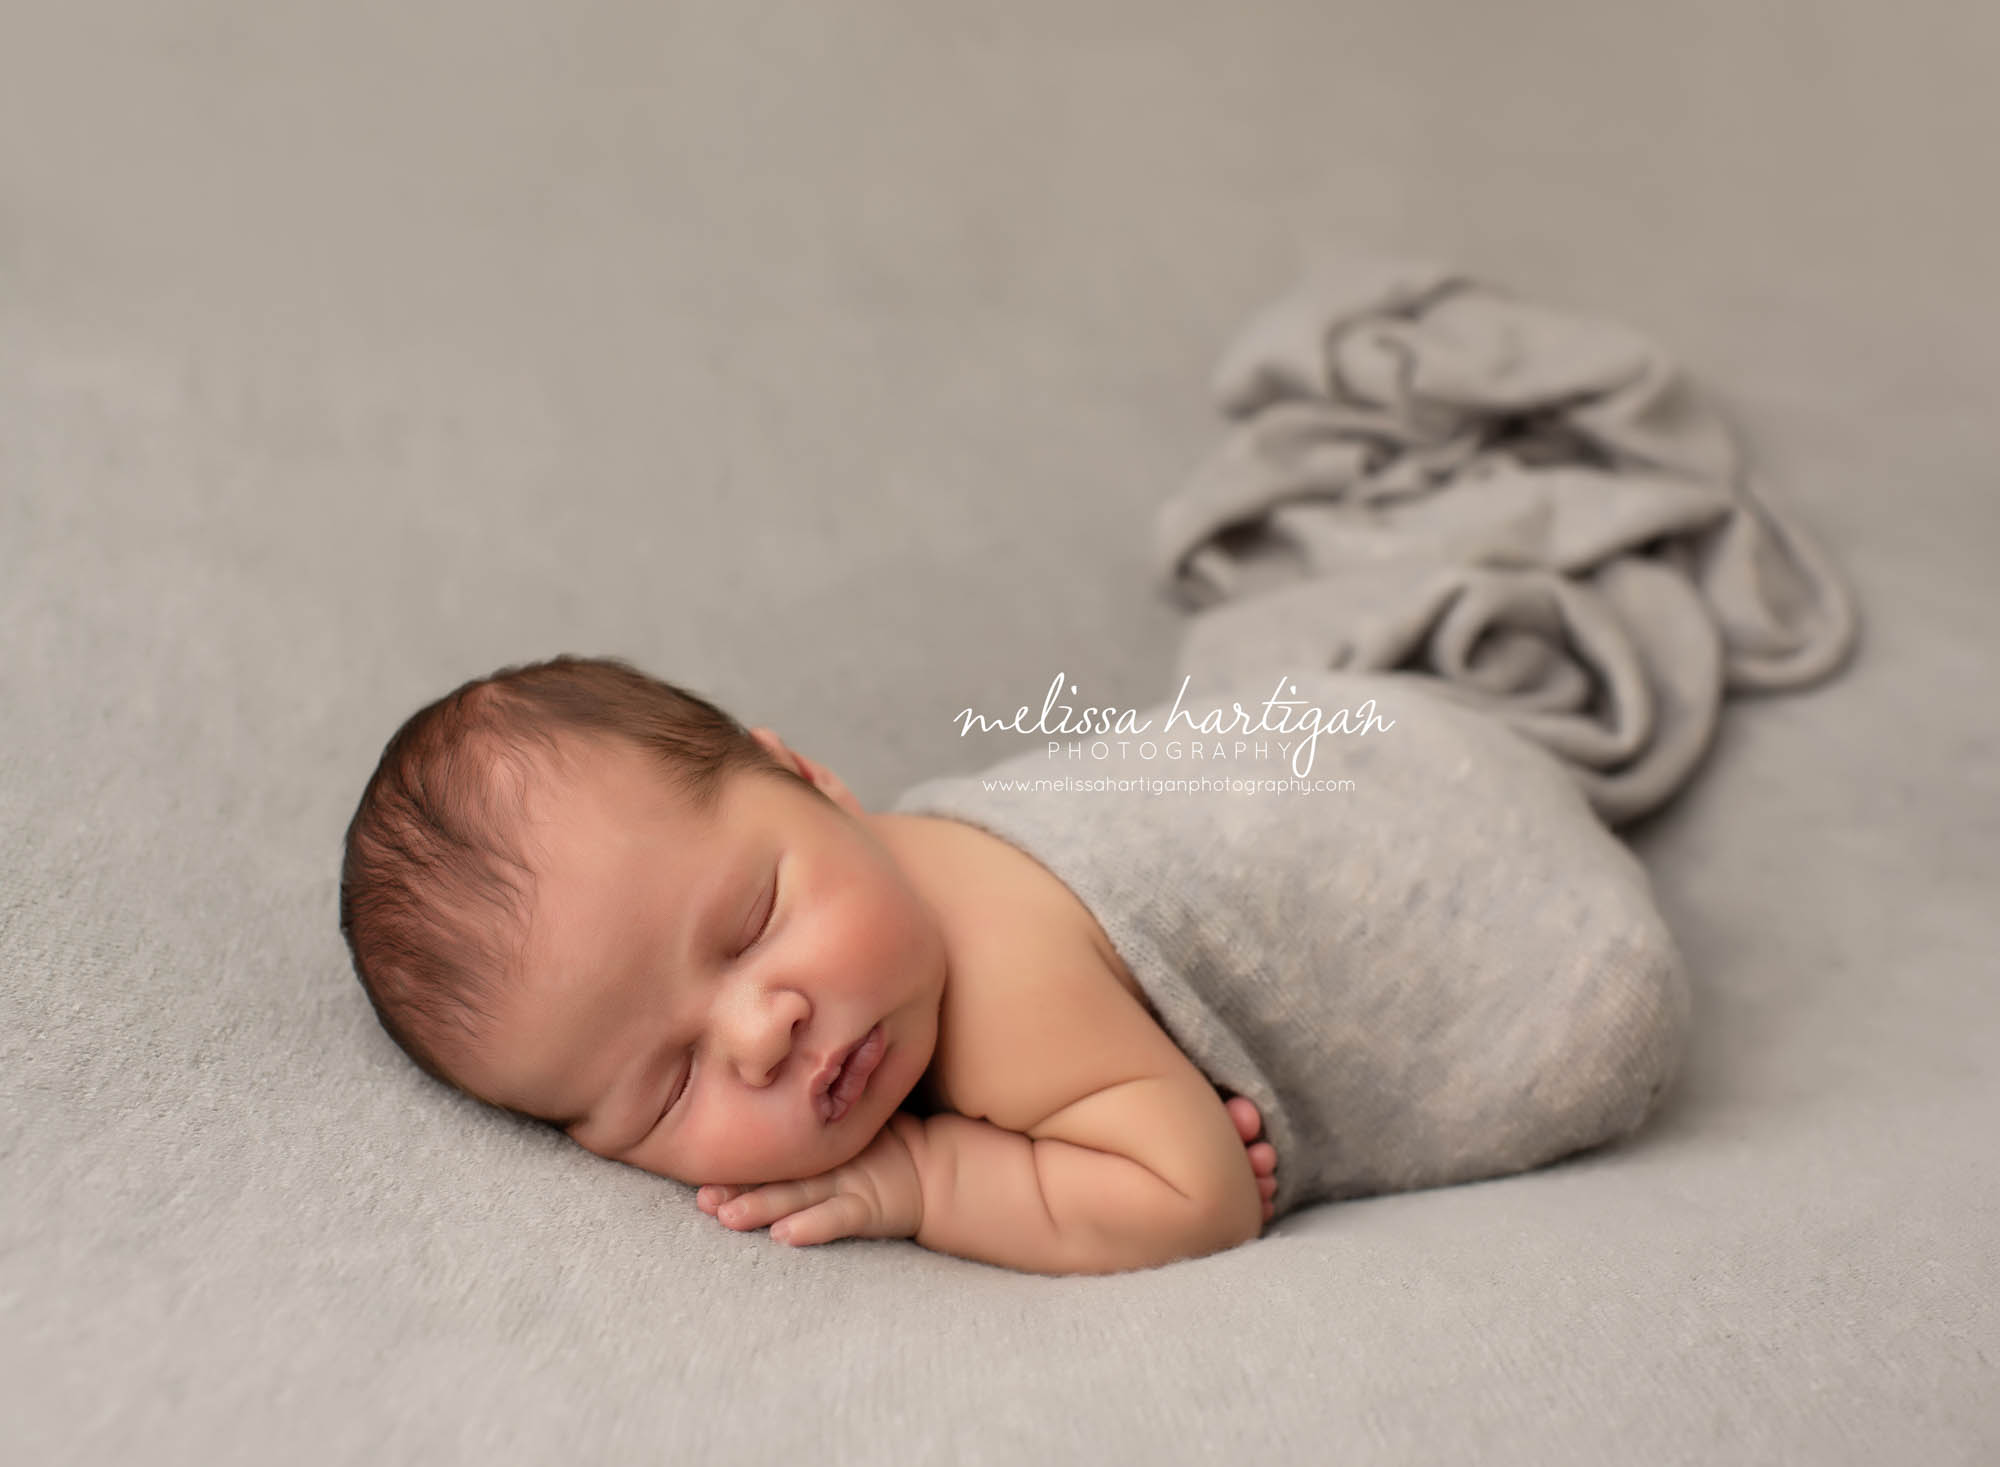 Baby boy sleeping on grey blanket with grey wrap posed newborn photos tolland county CT newborn photographers